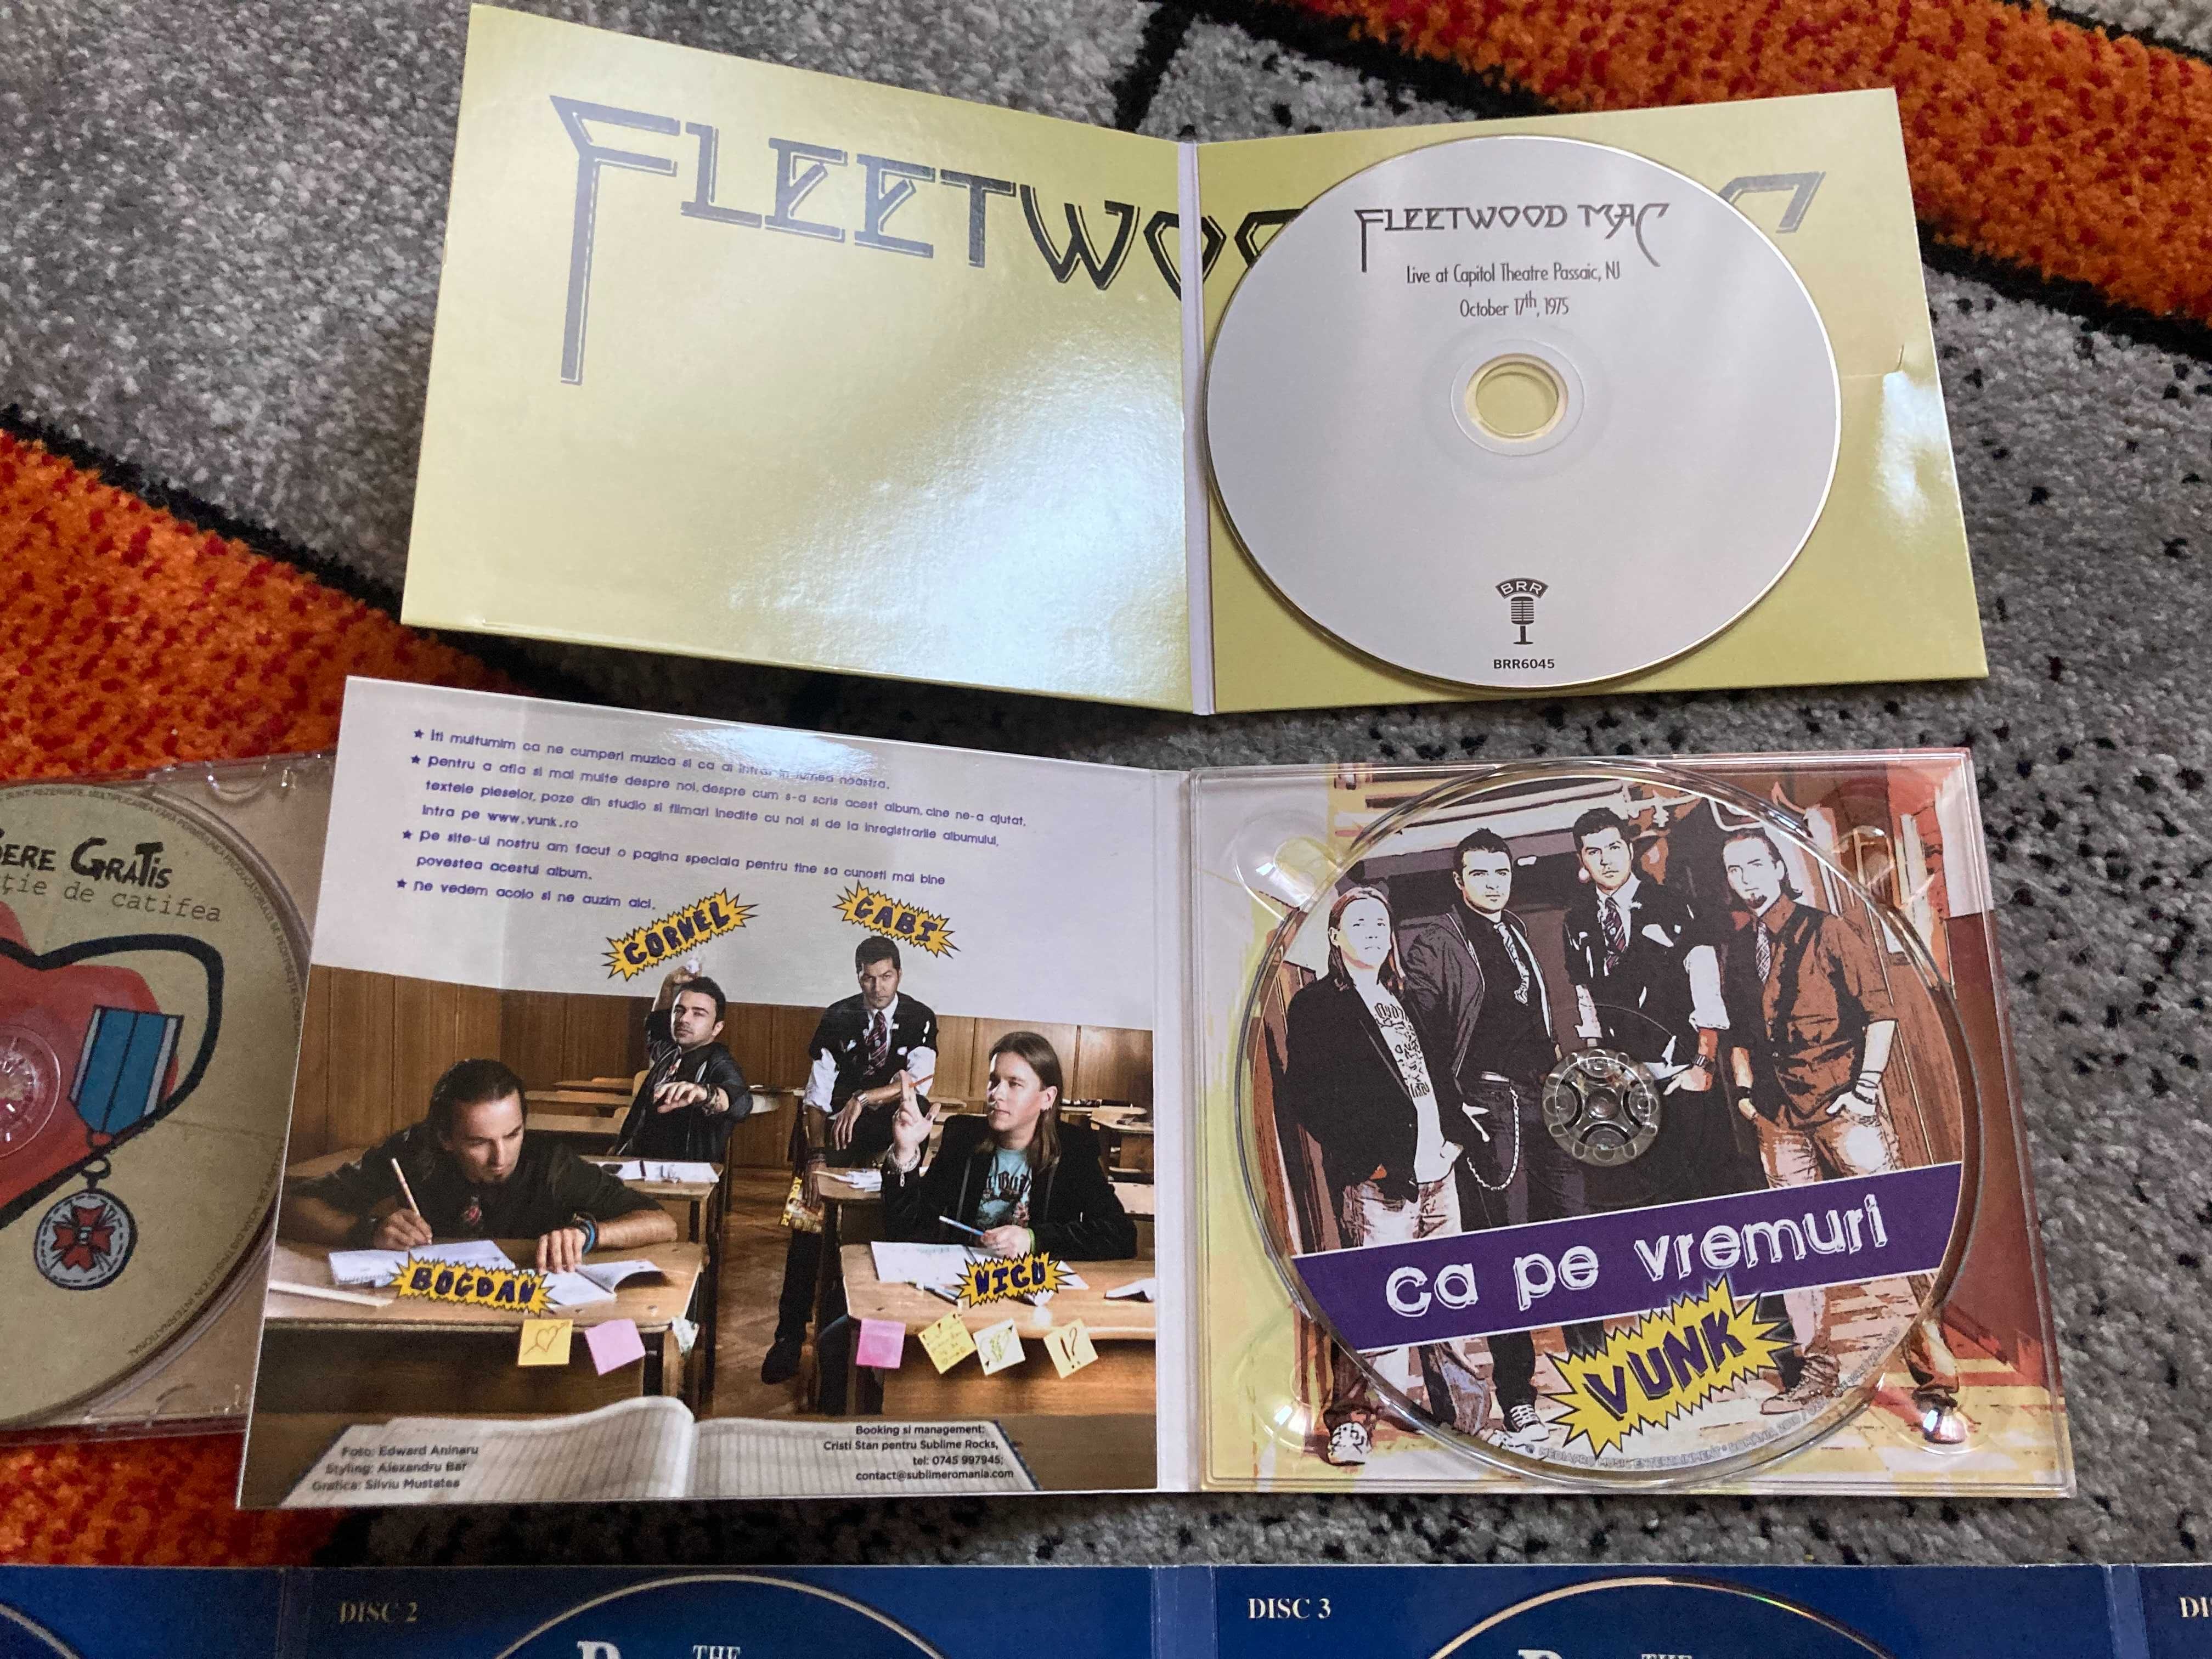 CD-uri - Fleetwood Mac, Bere Gratis, Chilian, Vunk, Loredana